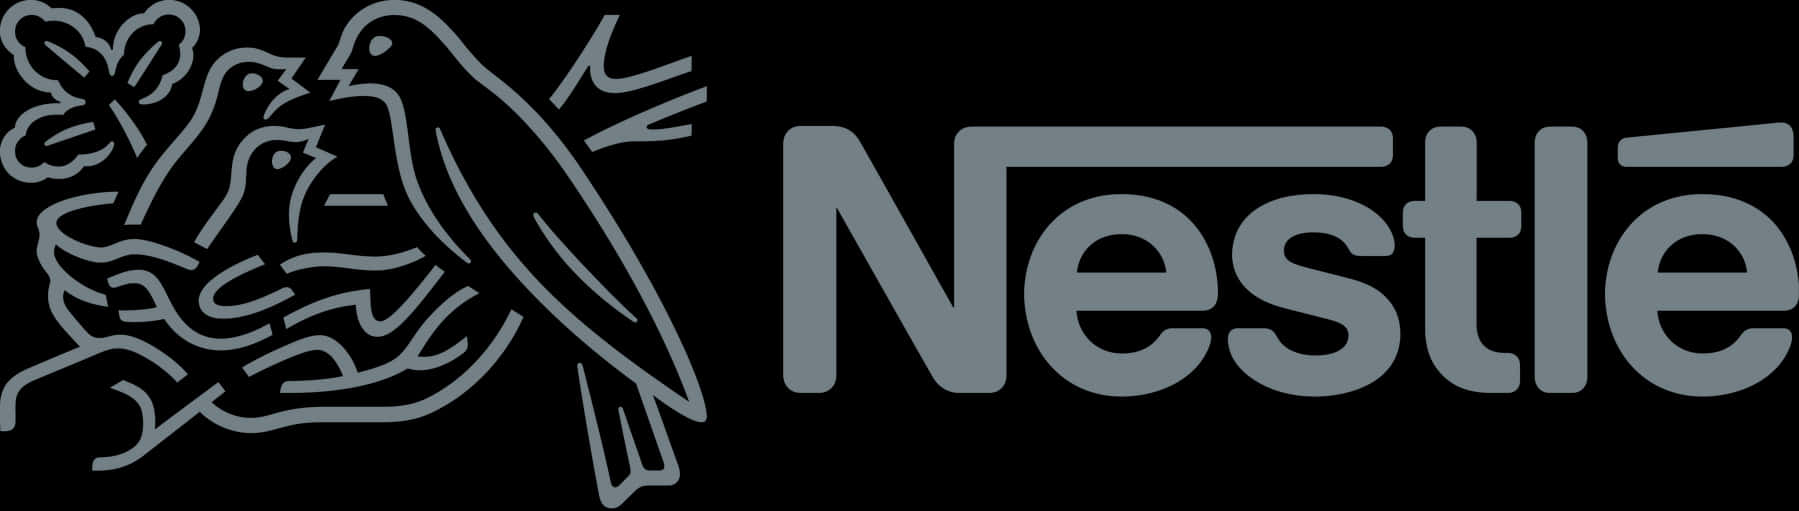 Gray Nestle Logo Horizontal Orientation